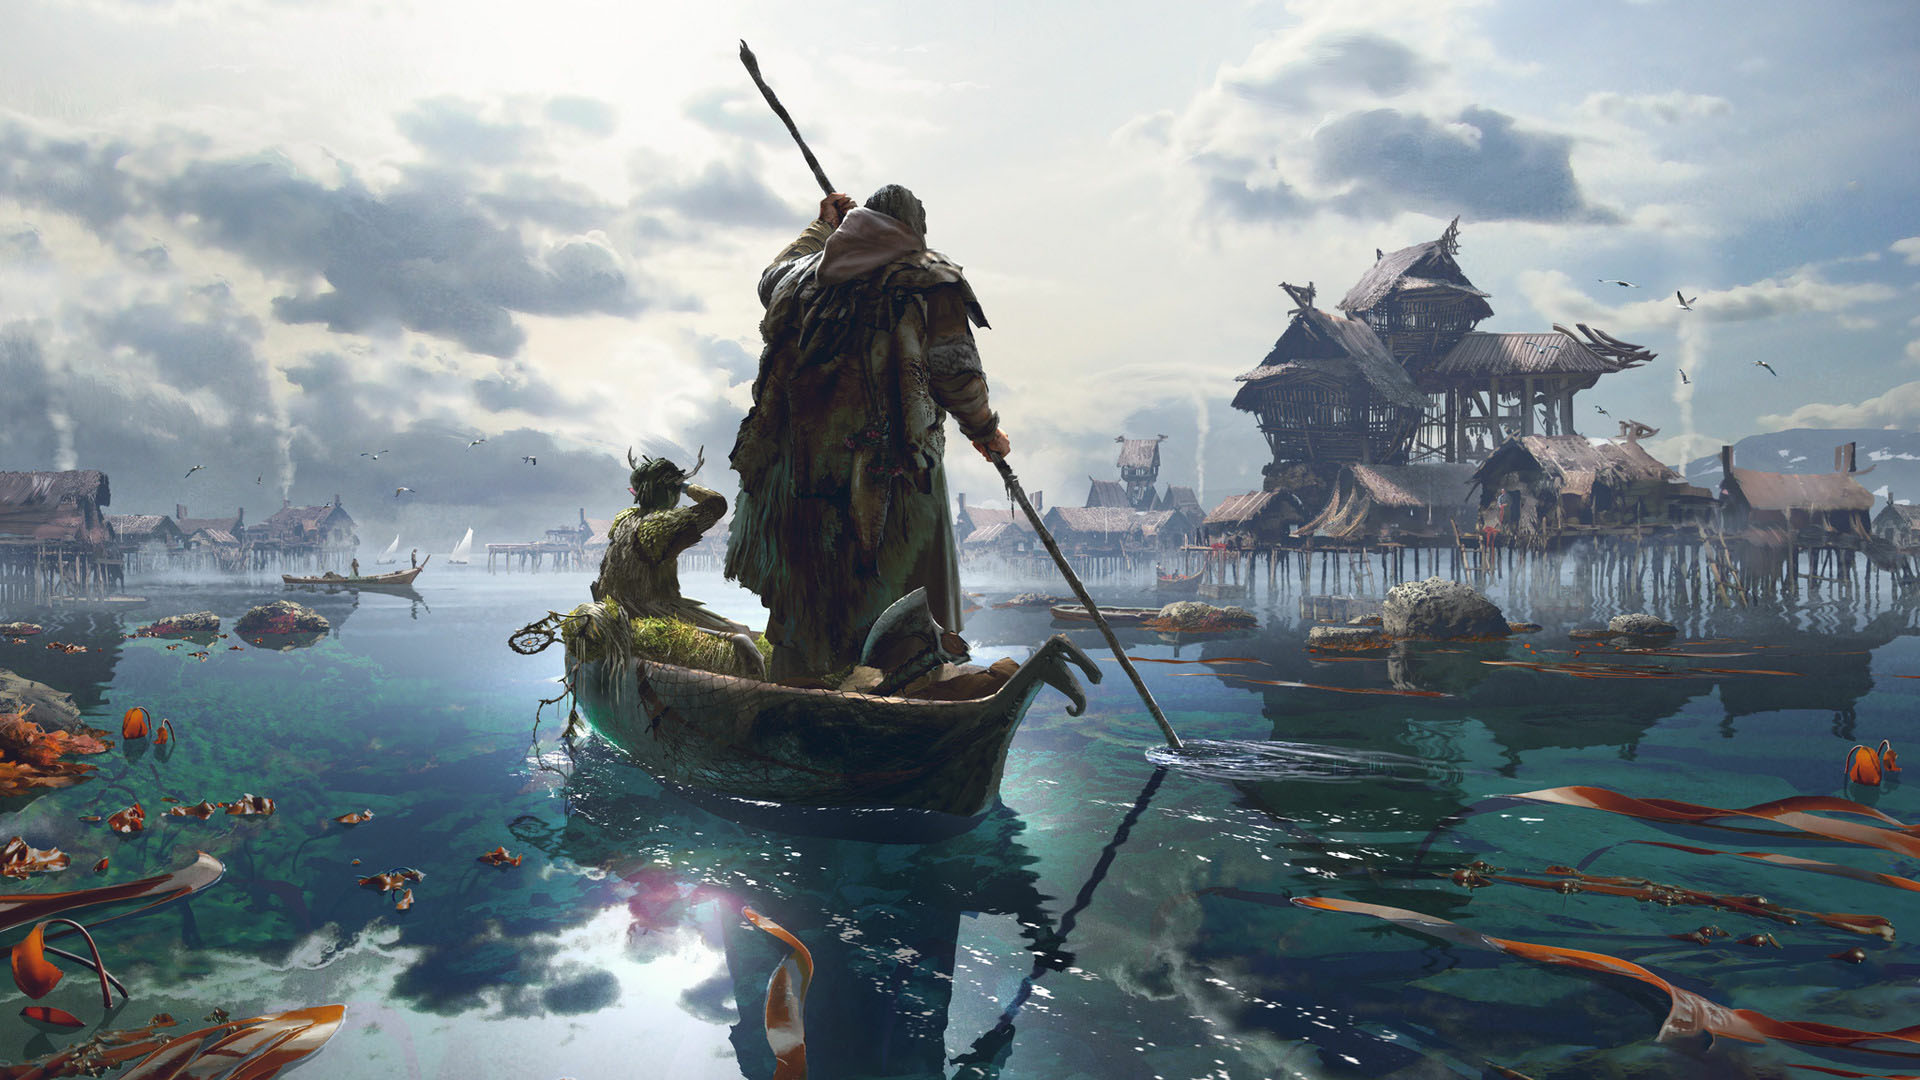 Anime 1920x1080 video games video game art fantasy art boat water sky vehicle village